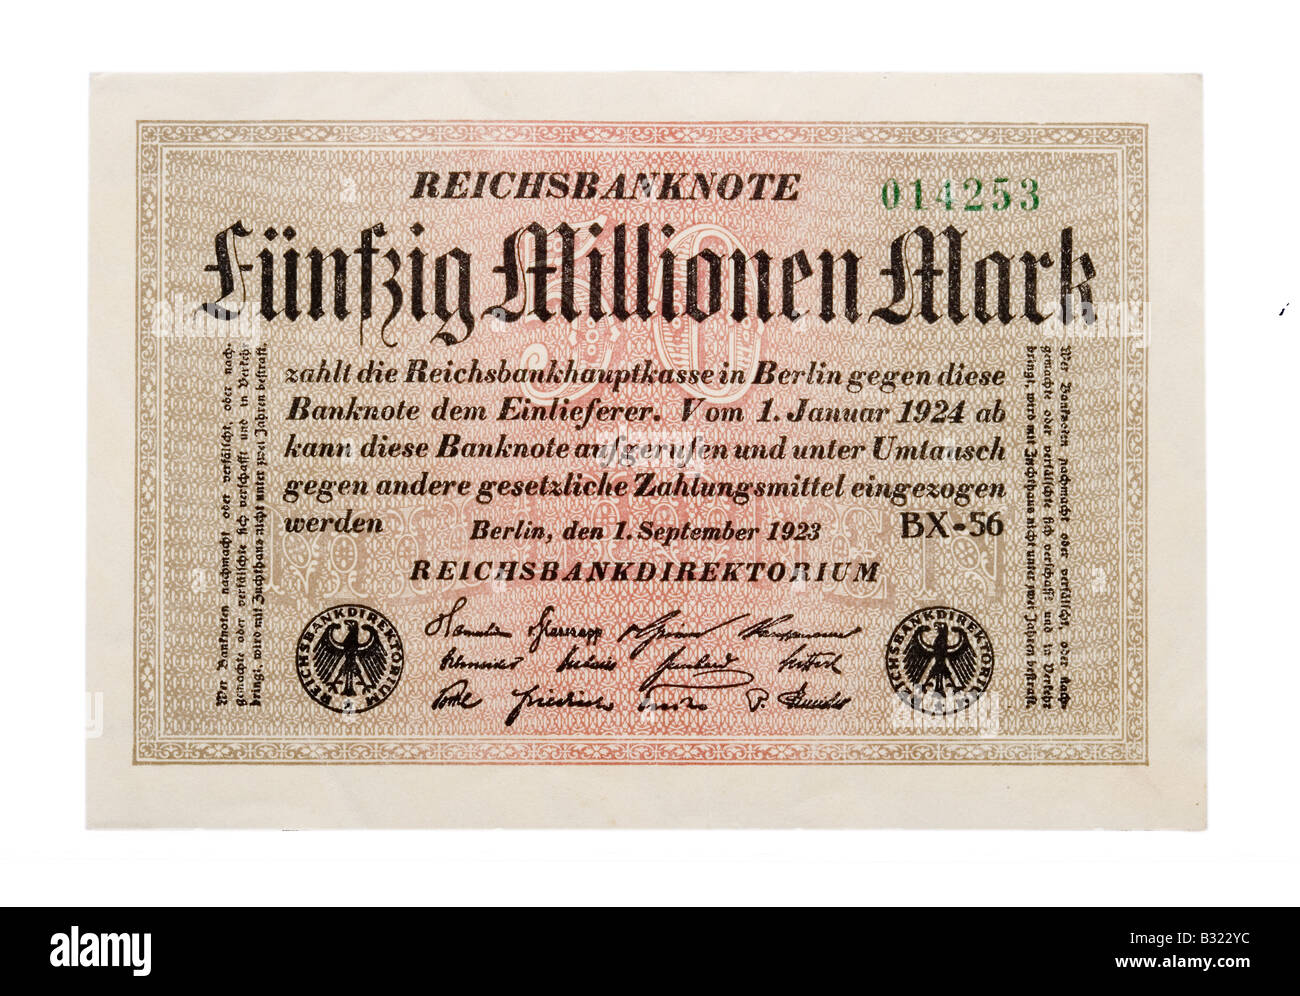 50 millions Mark dating of 1st September 1923 Germany Stock Photo